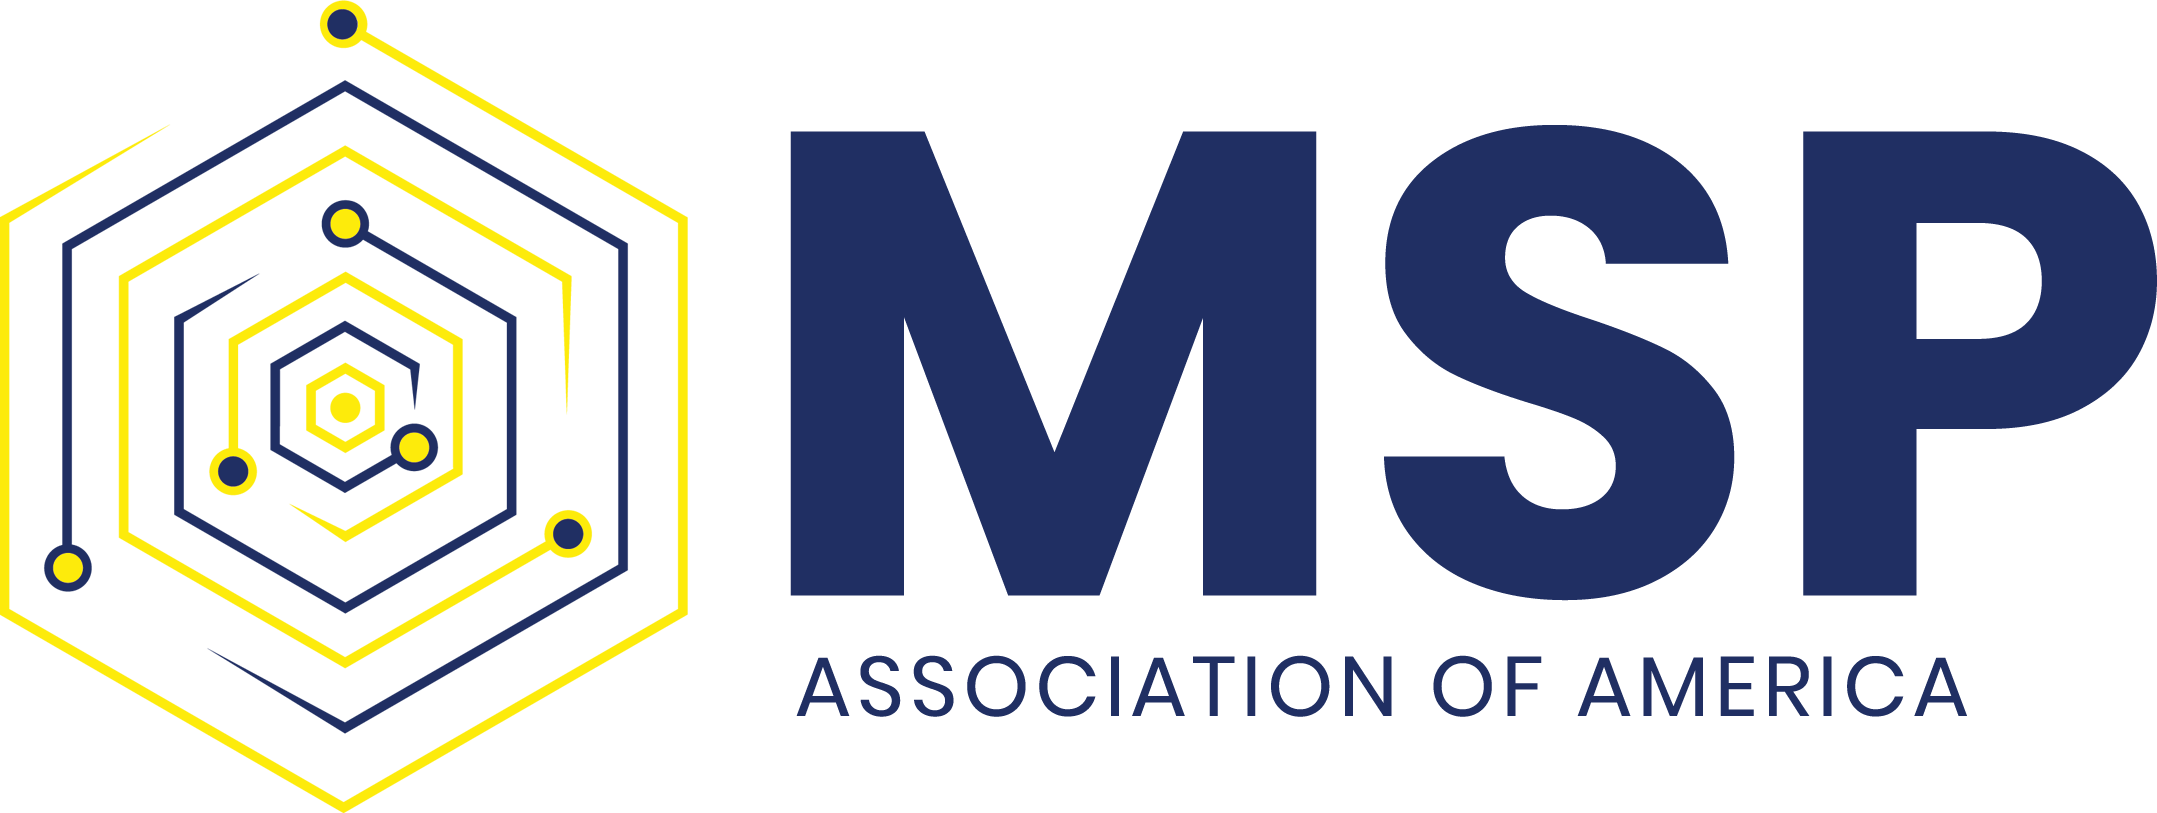 Kickstart Marketing Strategy | MSP Association of America